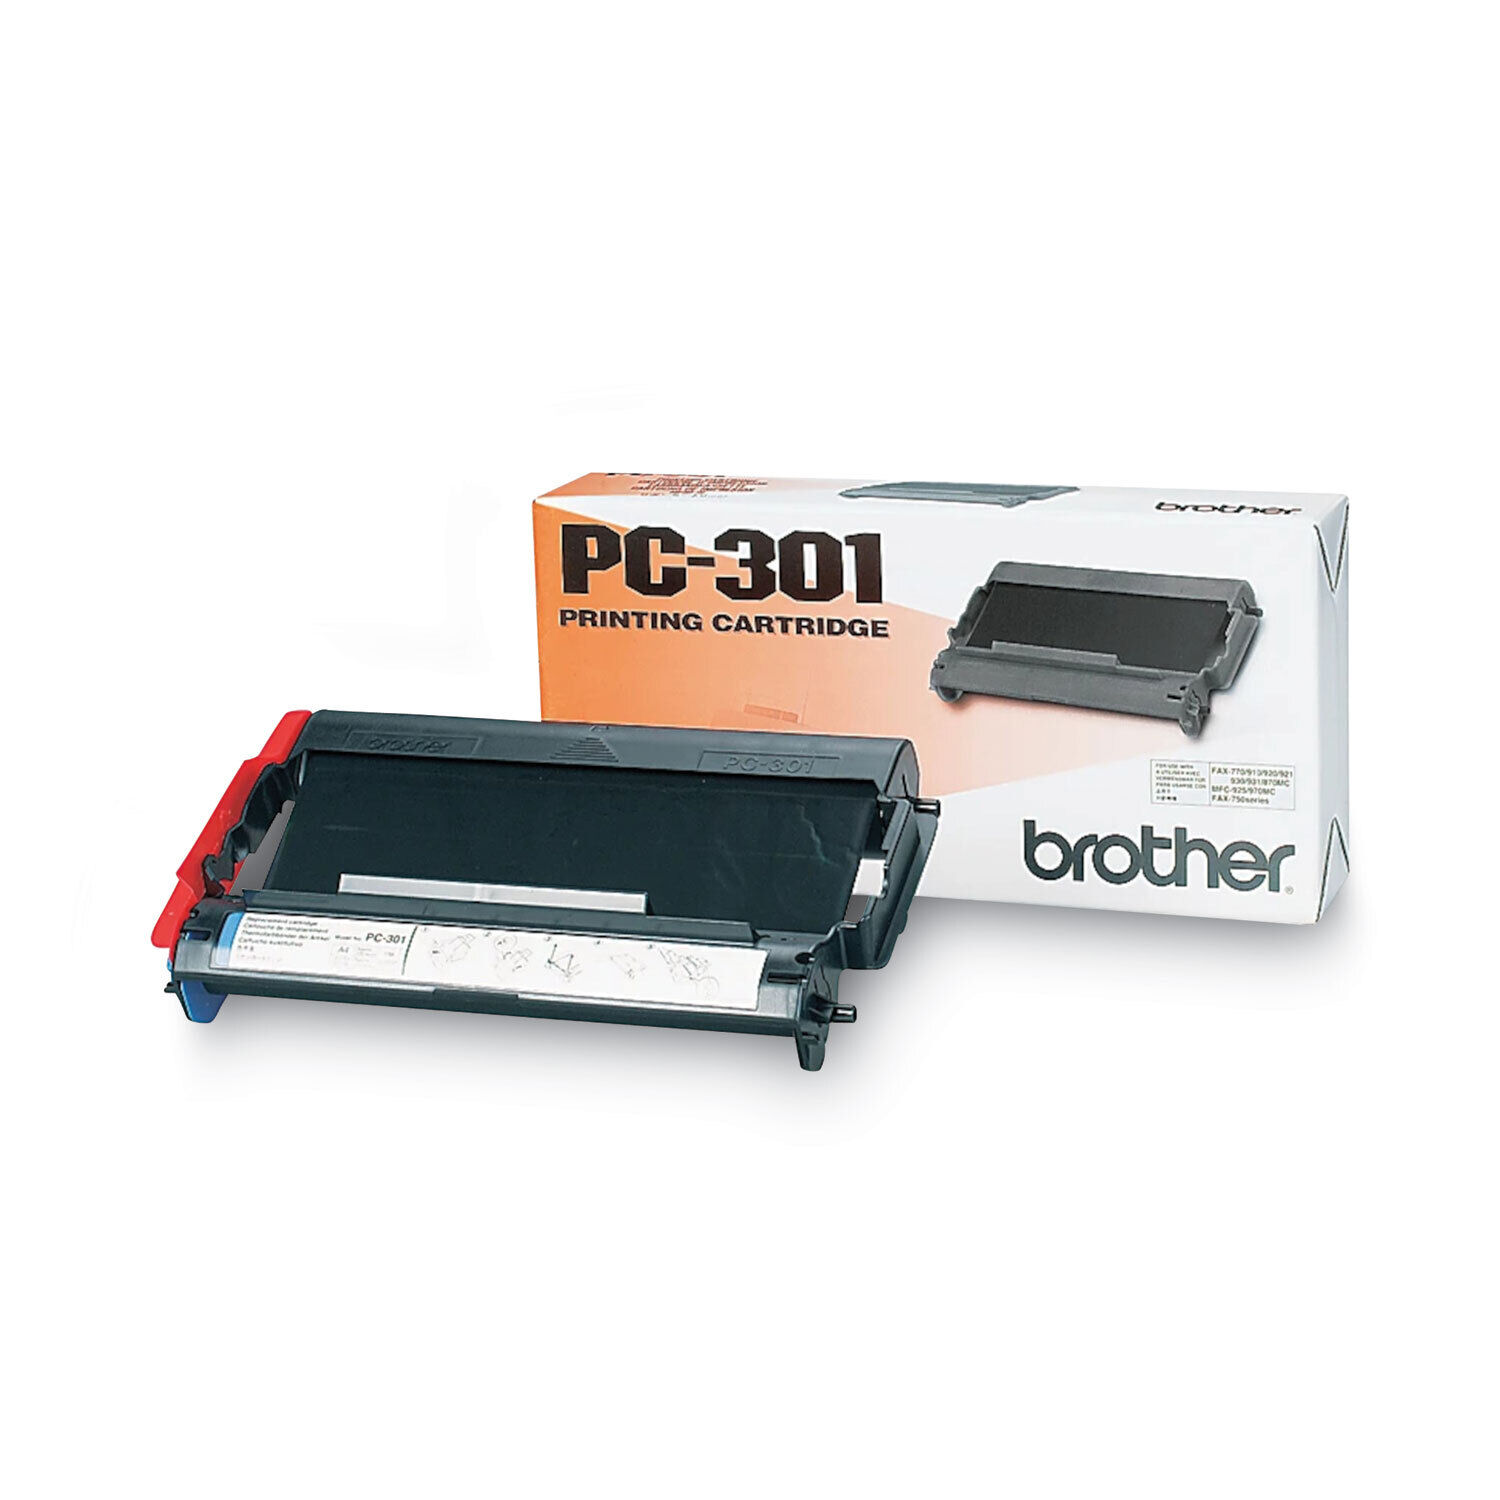 Brother PC-301 Black Toner Printing Cartridge (New)